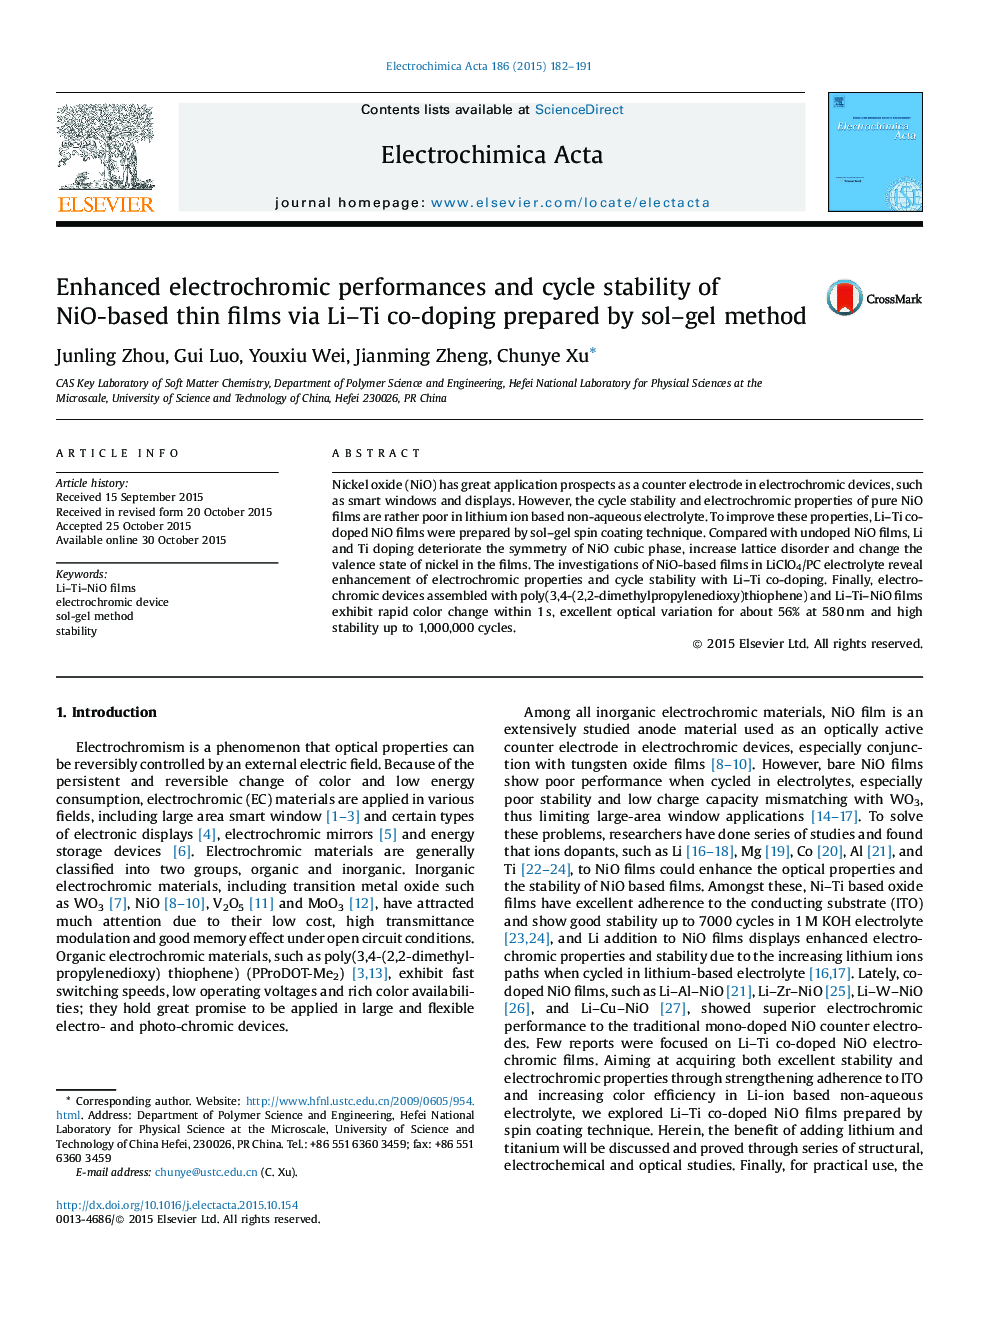 Enhanced electrochromic performances and cycle stability of NiO-based thin films via Li–Ti co-doping prepared by sol–gel method